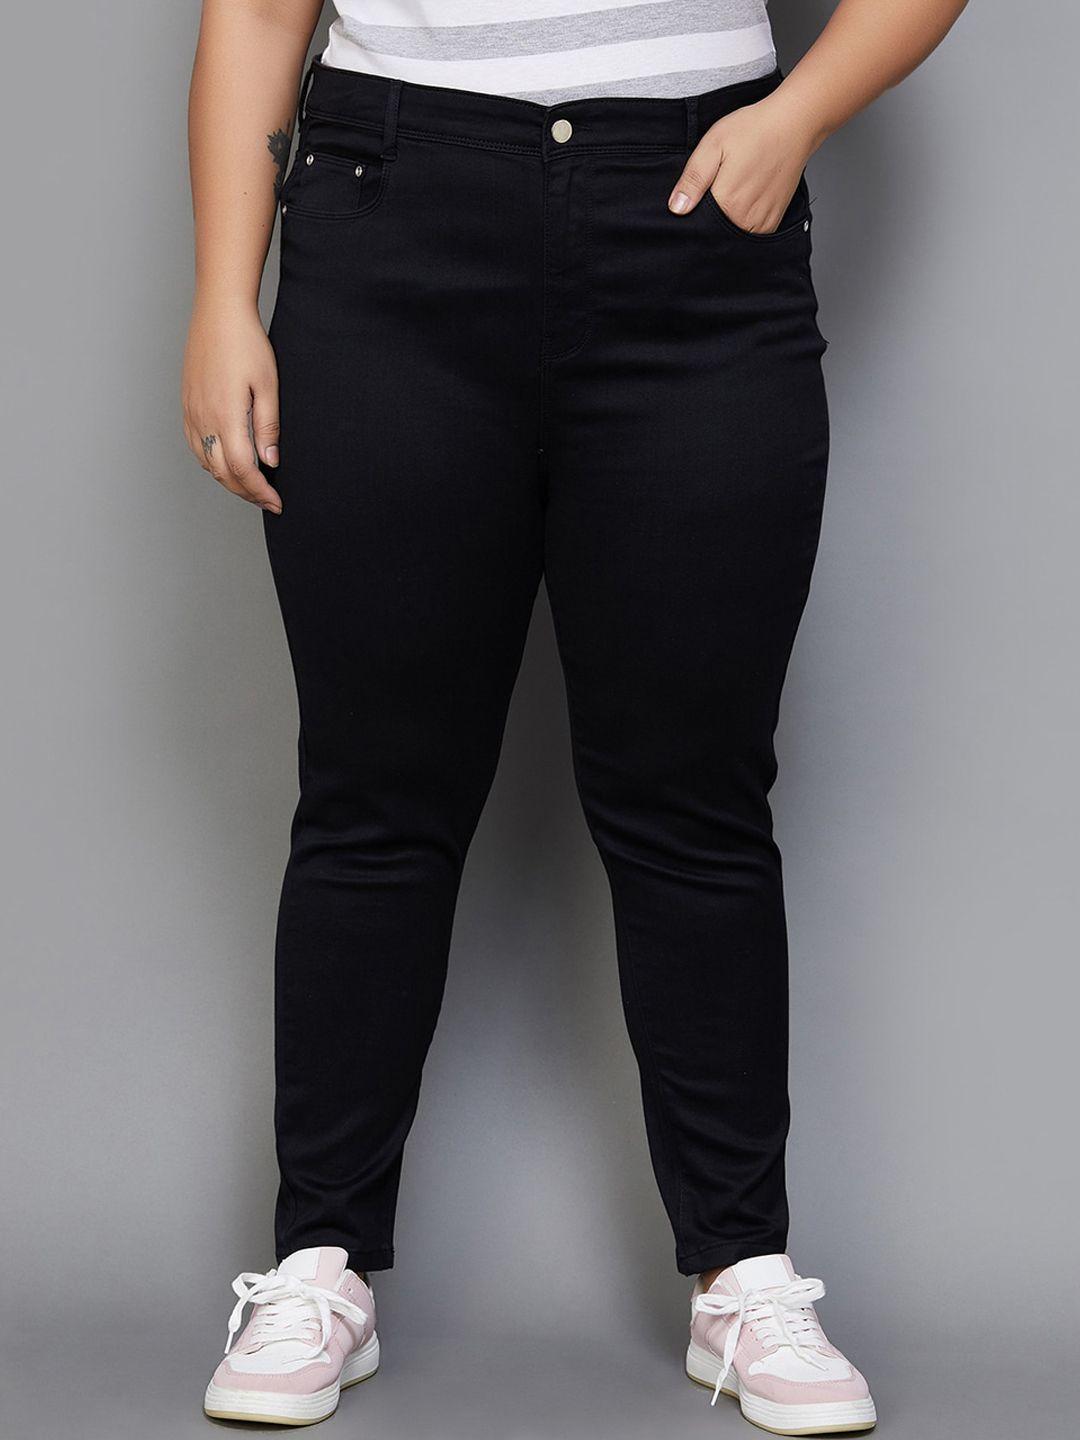 Nexus by Lifestyle Plus Size Women Skinny Fit Clean Look Jeans